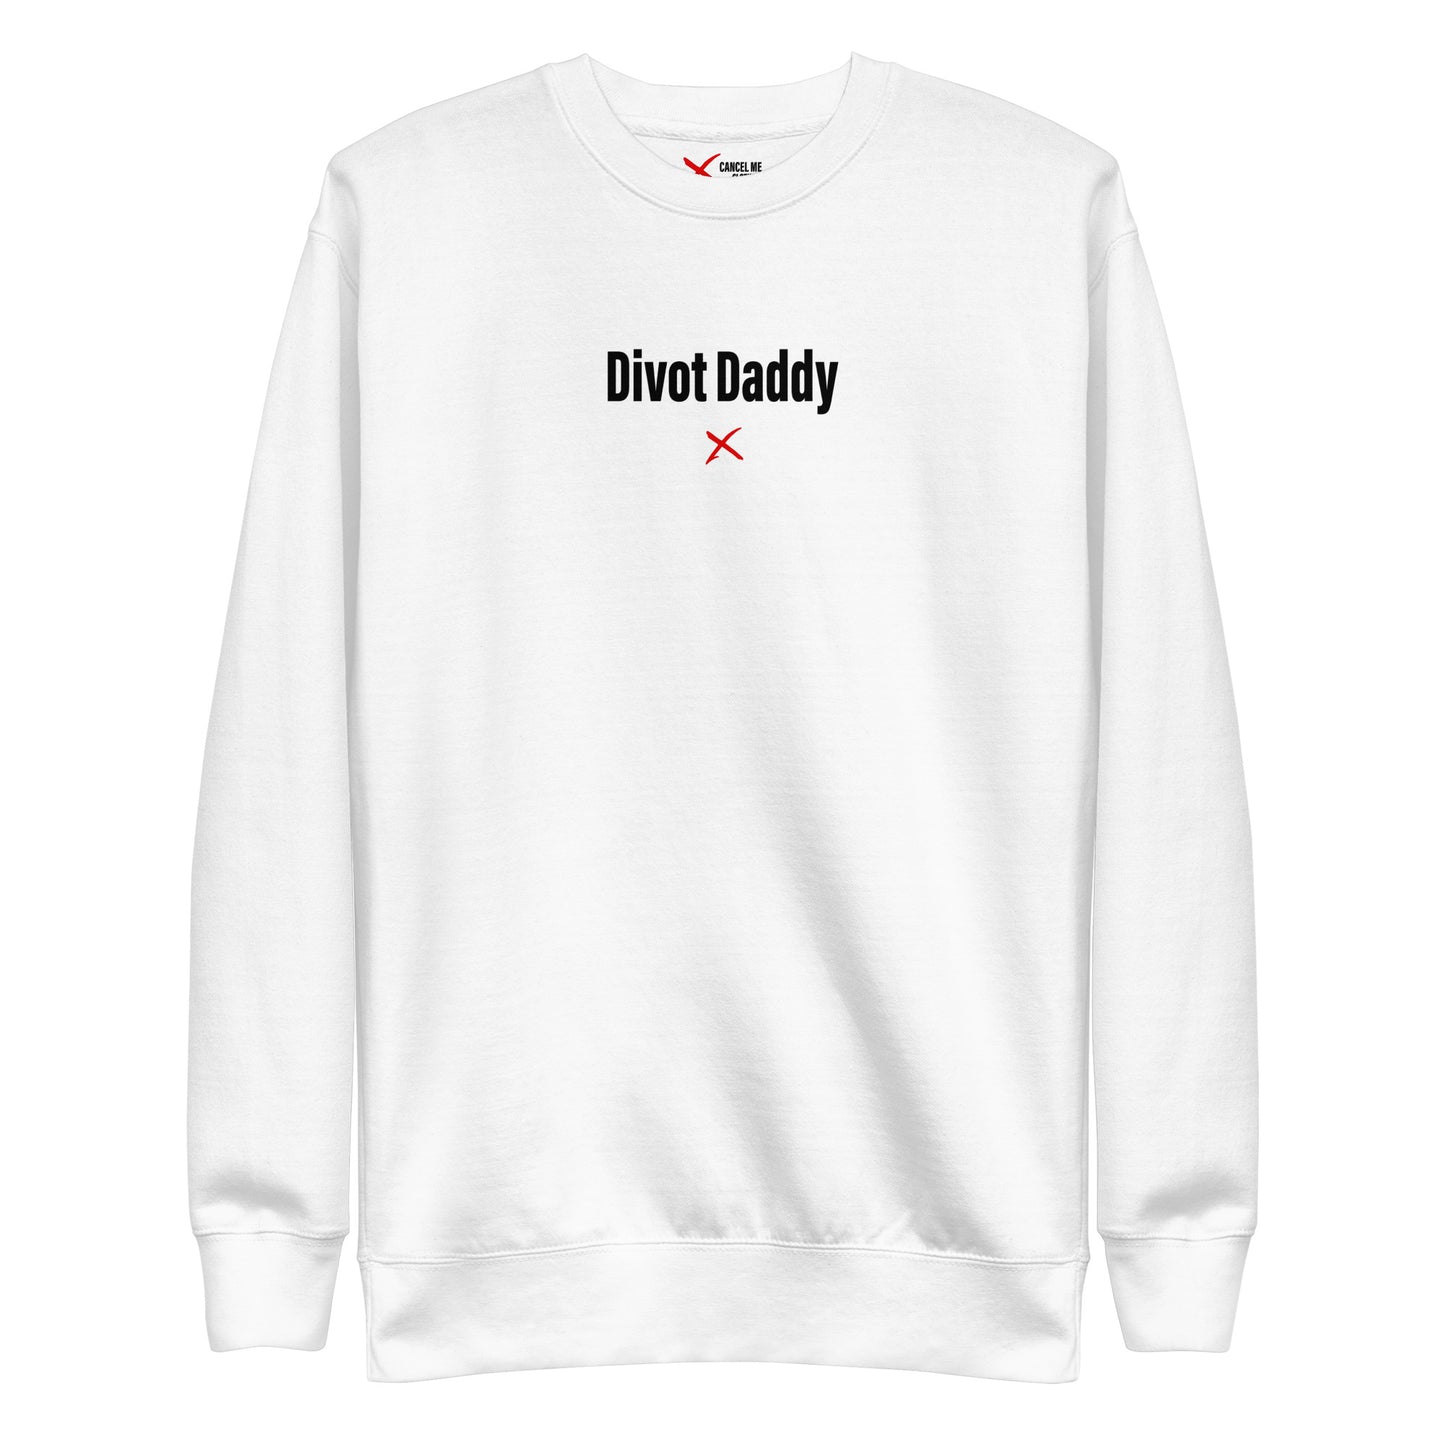 Divot Daddy - Sweatshirt